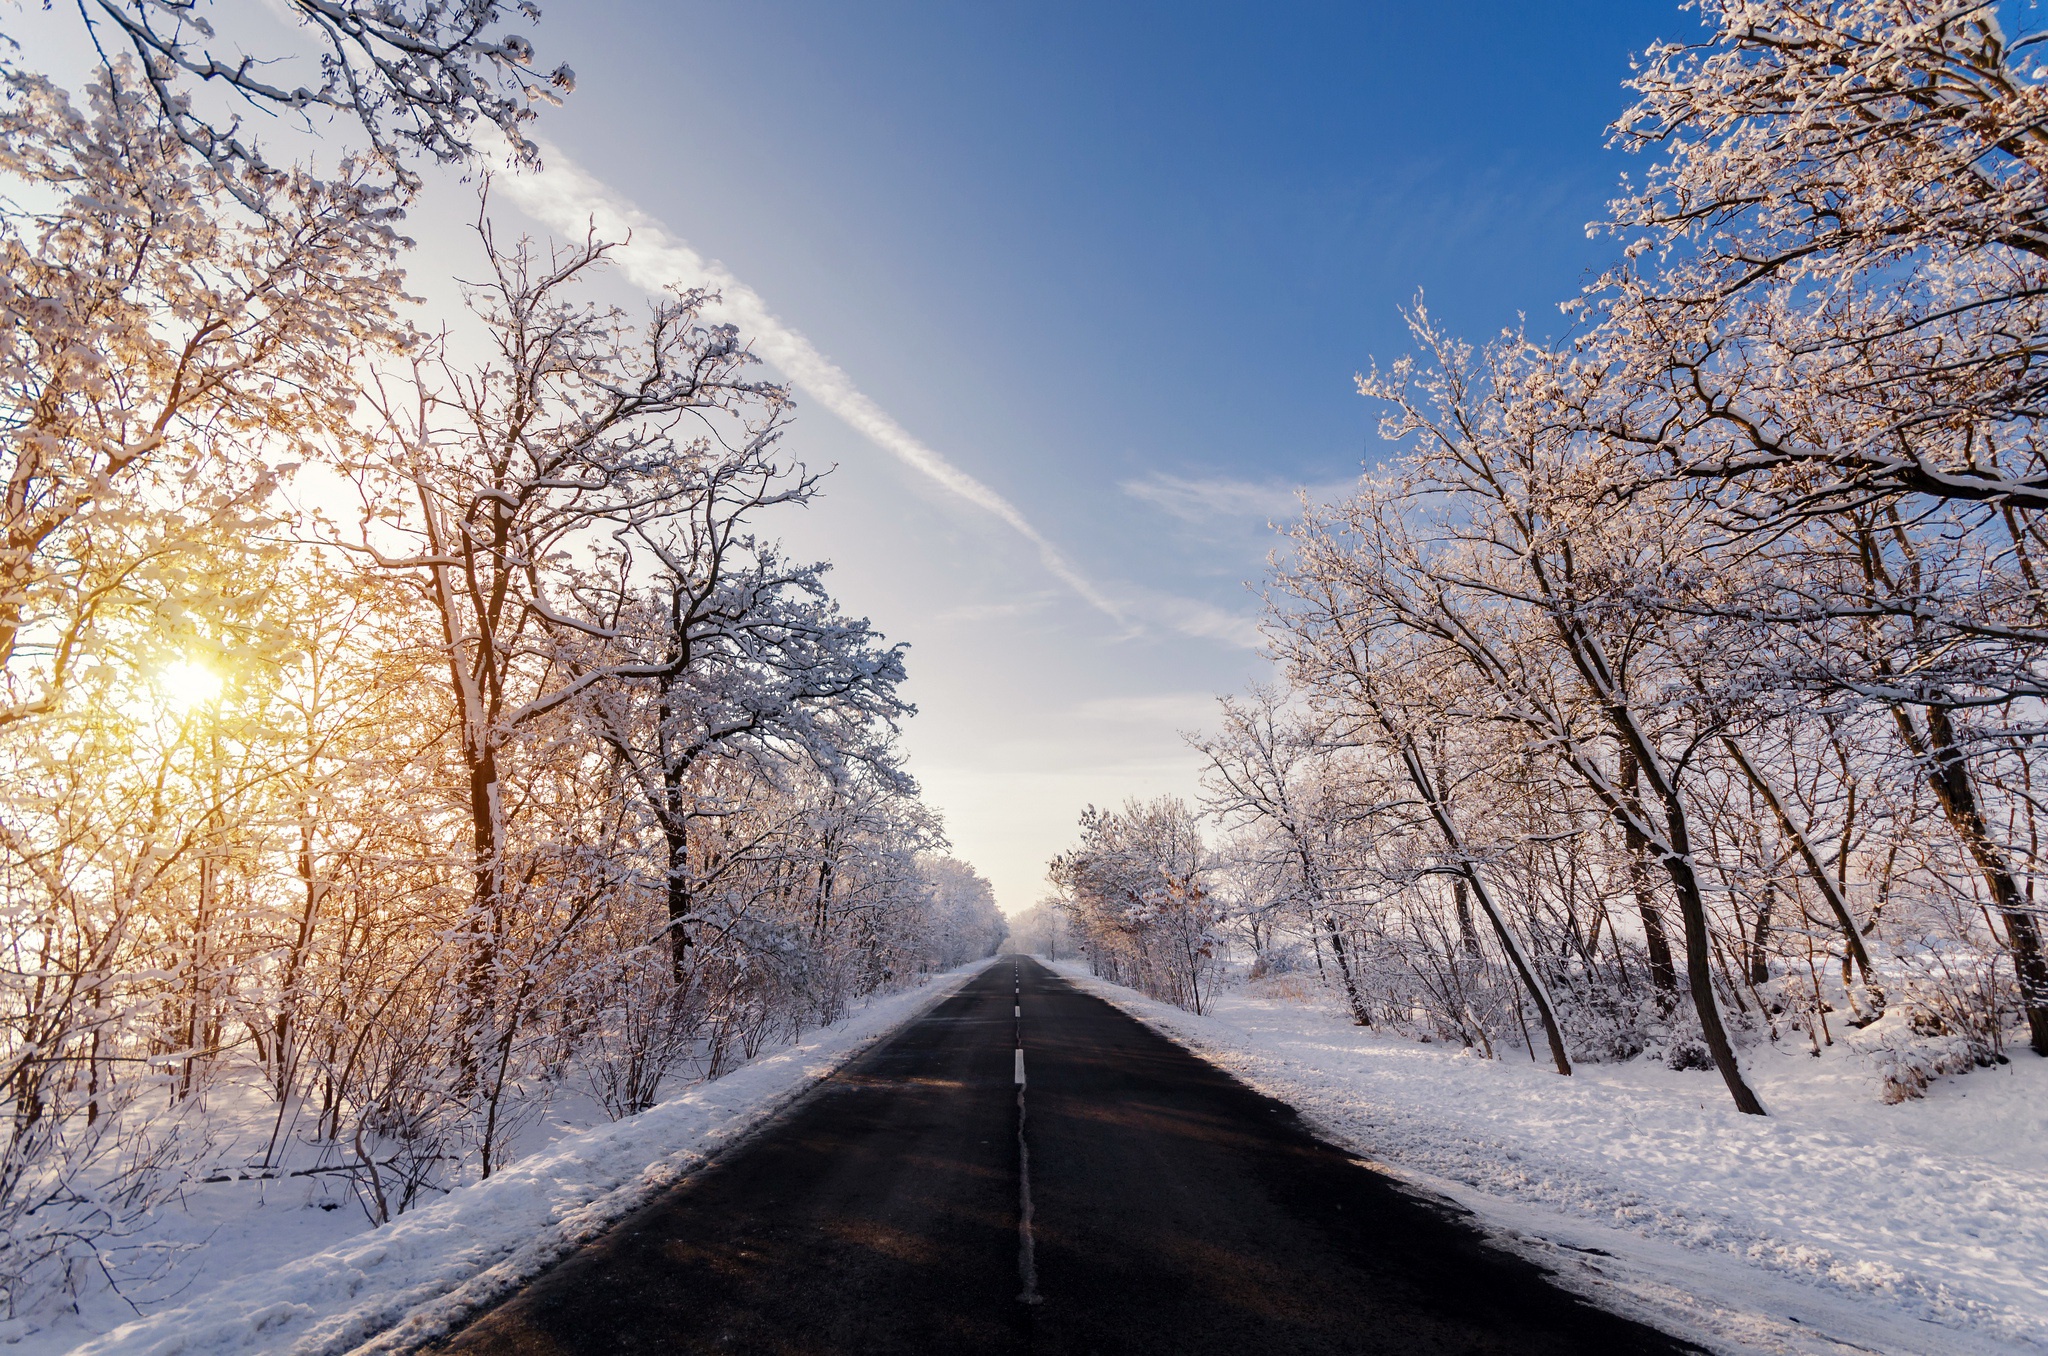 General 2048x1356 winter road trees outdoors asphalt snow long road calm sunlight